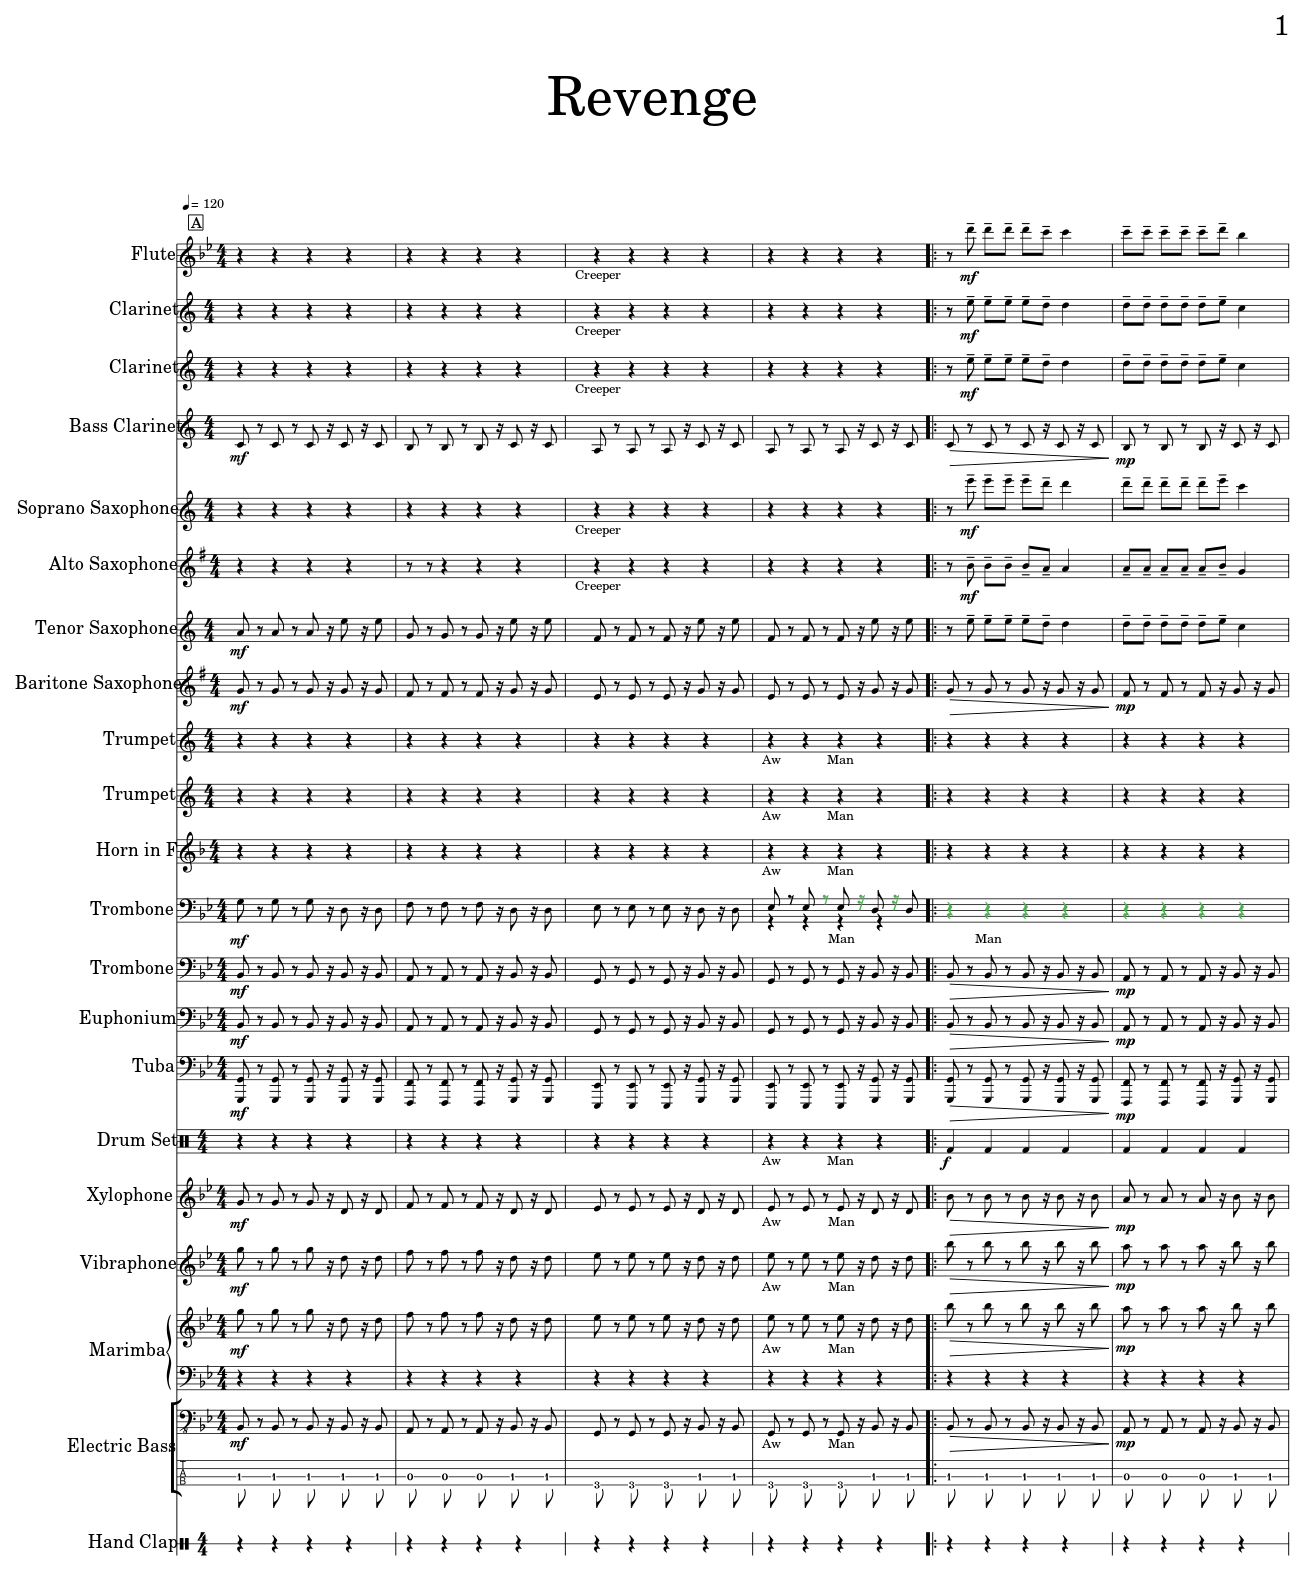 Revenge Sheet Music For Flute Clarinet Bass Clarinet Soprano